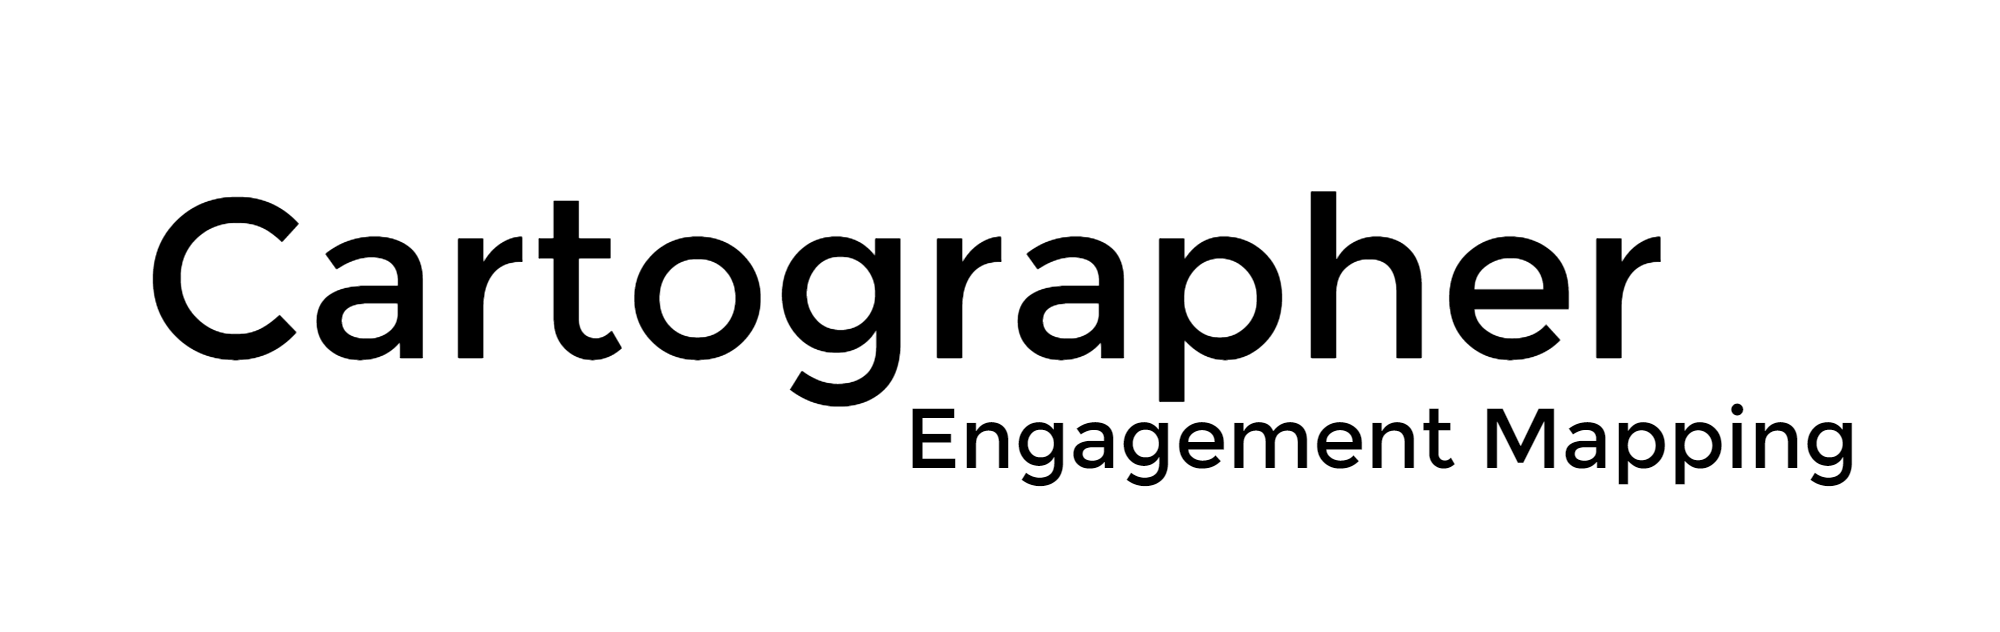 Cartographer Logo - Cartographer Engagement Mapping (Sales & Marketing Automation ...